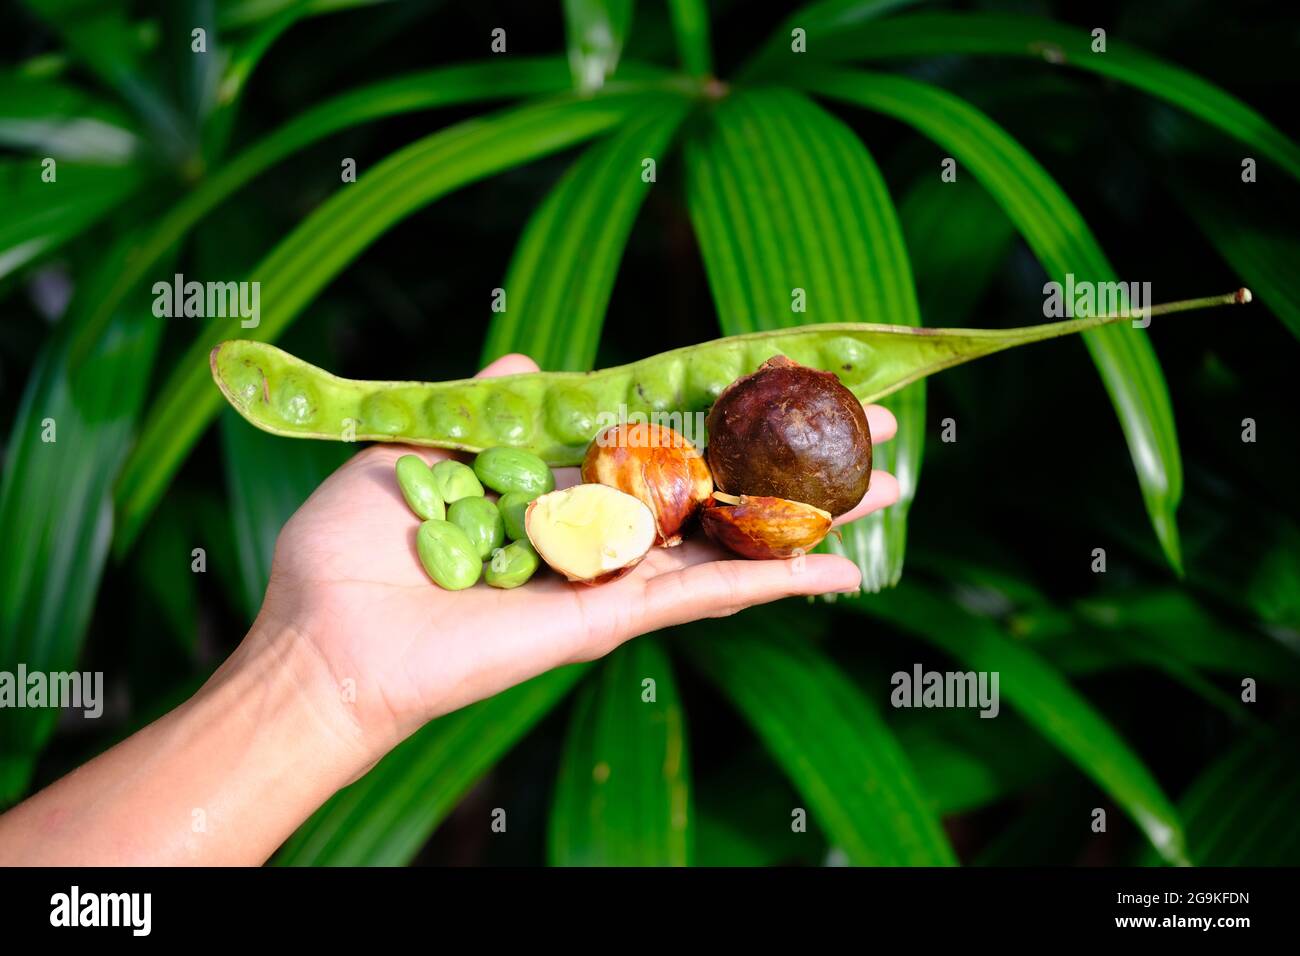 Indonesia Batam - Parkia speciosa - bitter bean - stink bean Stock Photo